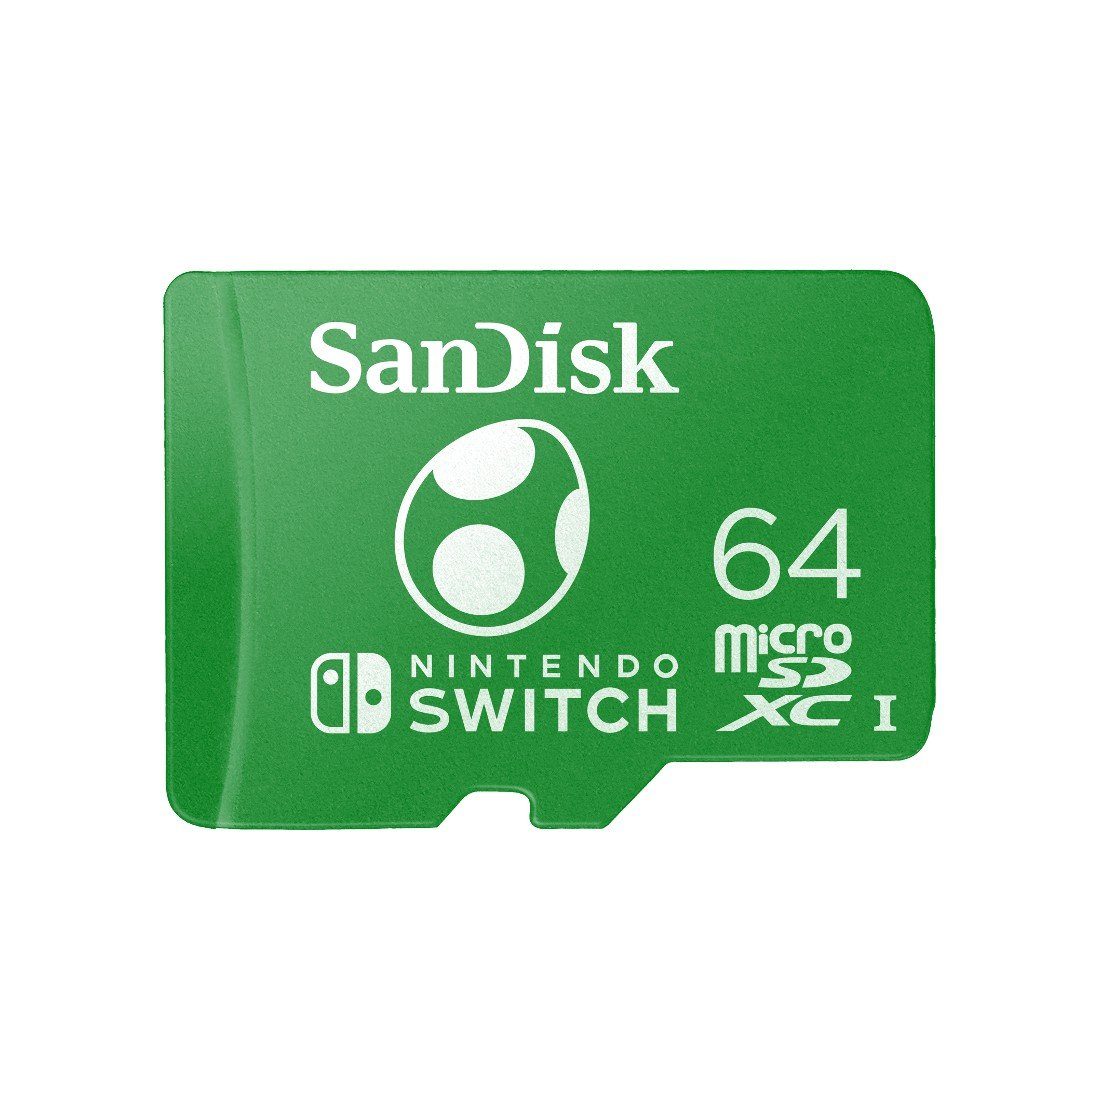 Sandisk microSDXC Extreme, Nintendo licensed Yoshi Edition Speicherkarte (64 GB, 100 MB/s Lesegeschwindigkeit)